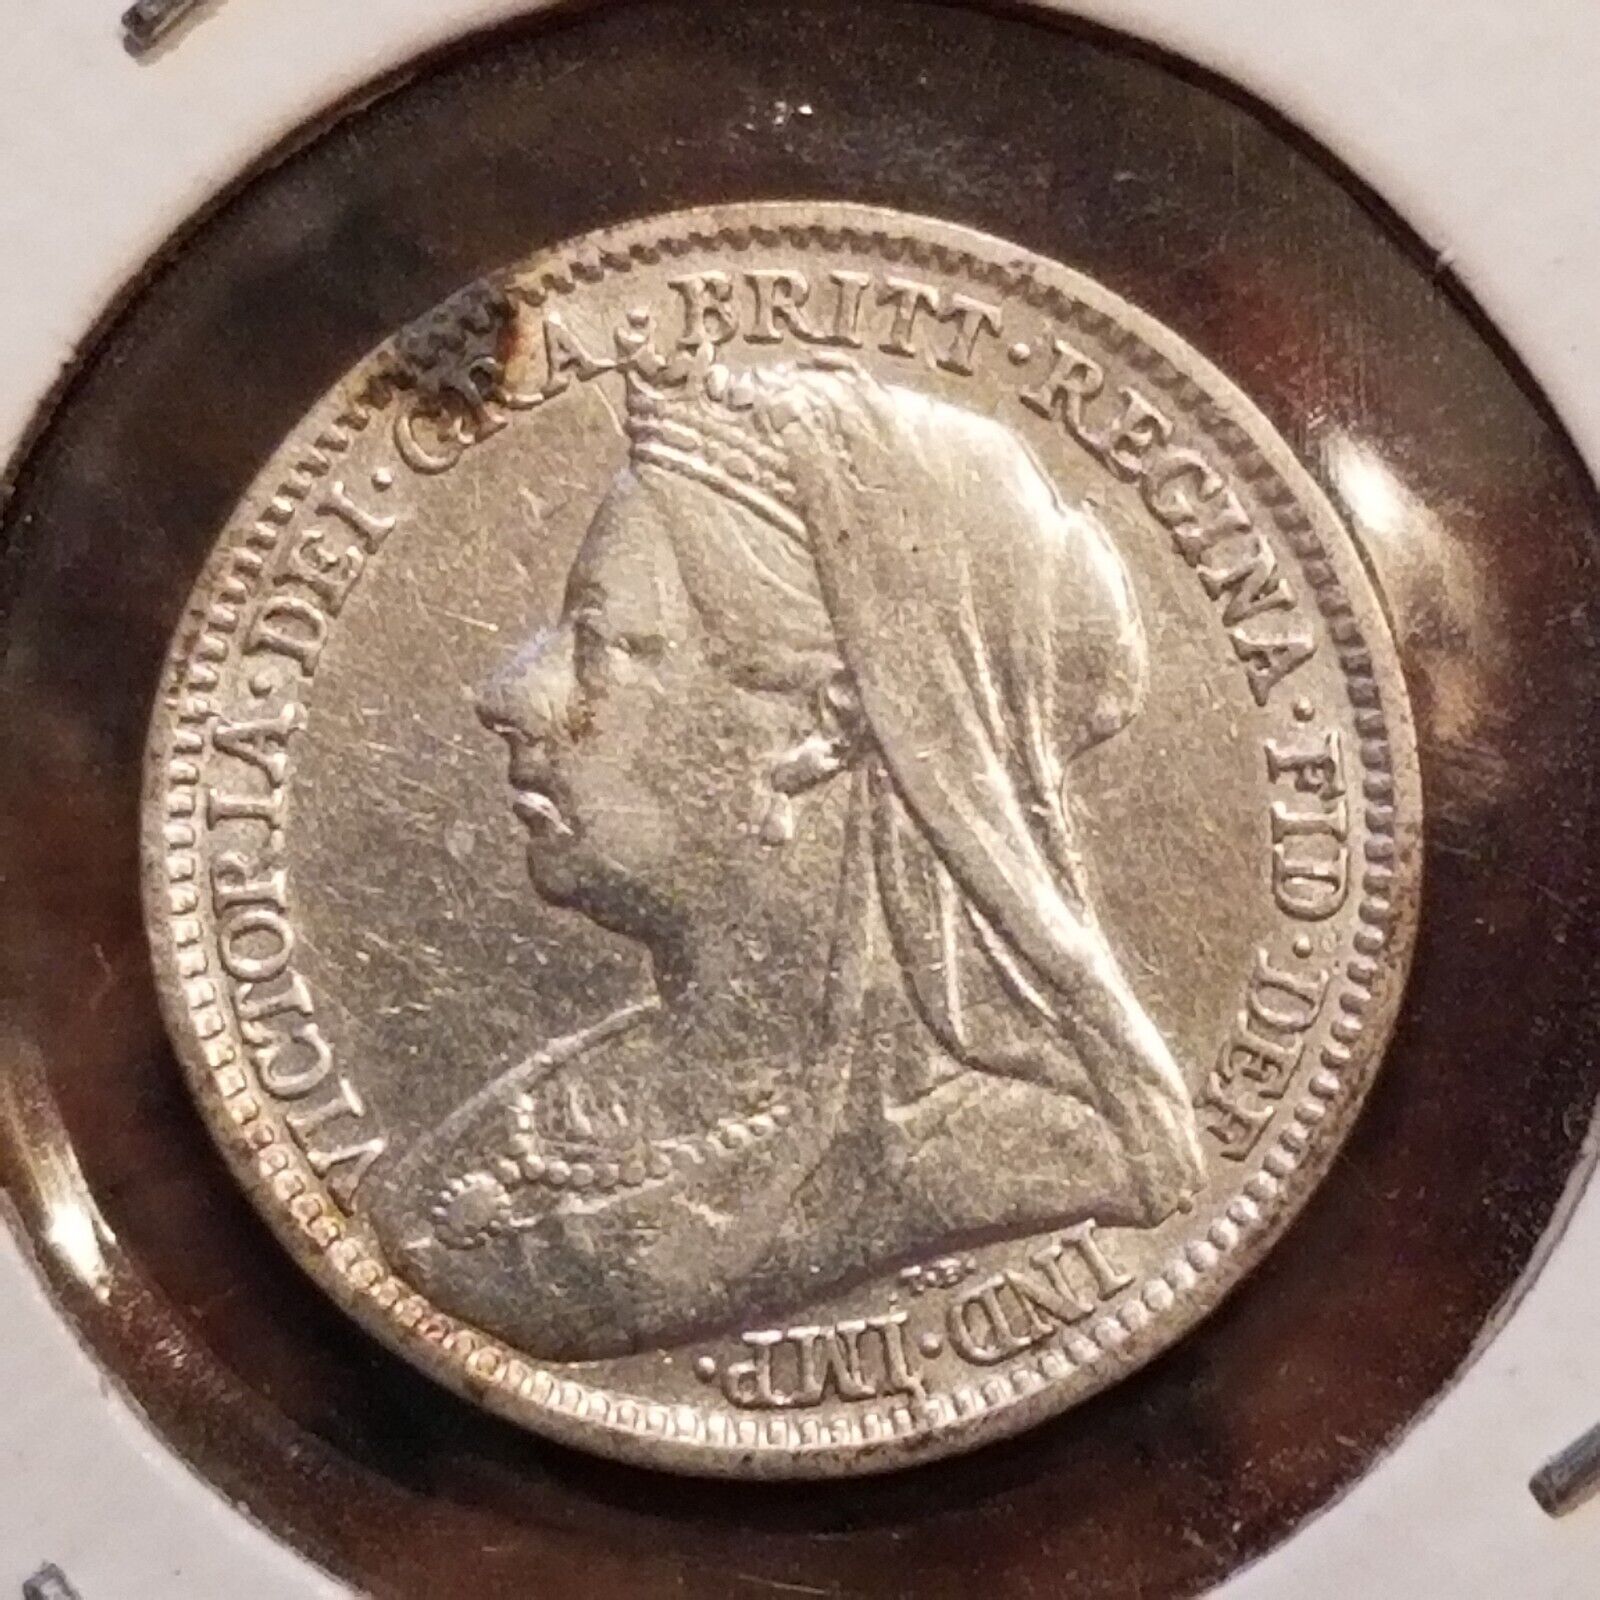 1897 Great Britain 3 Pence Coin - High Grade .925 Silver - #a8424